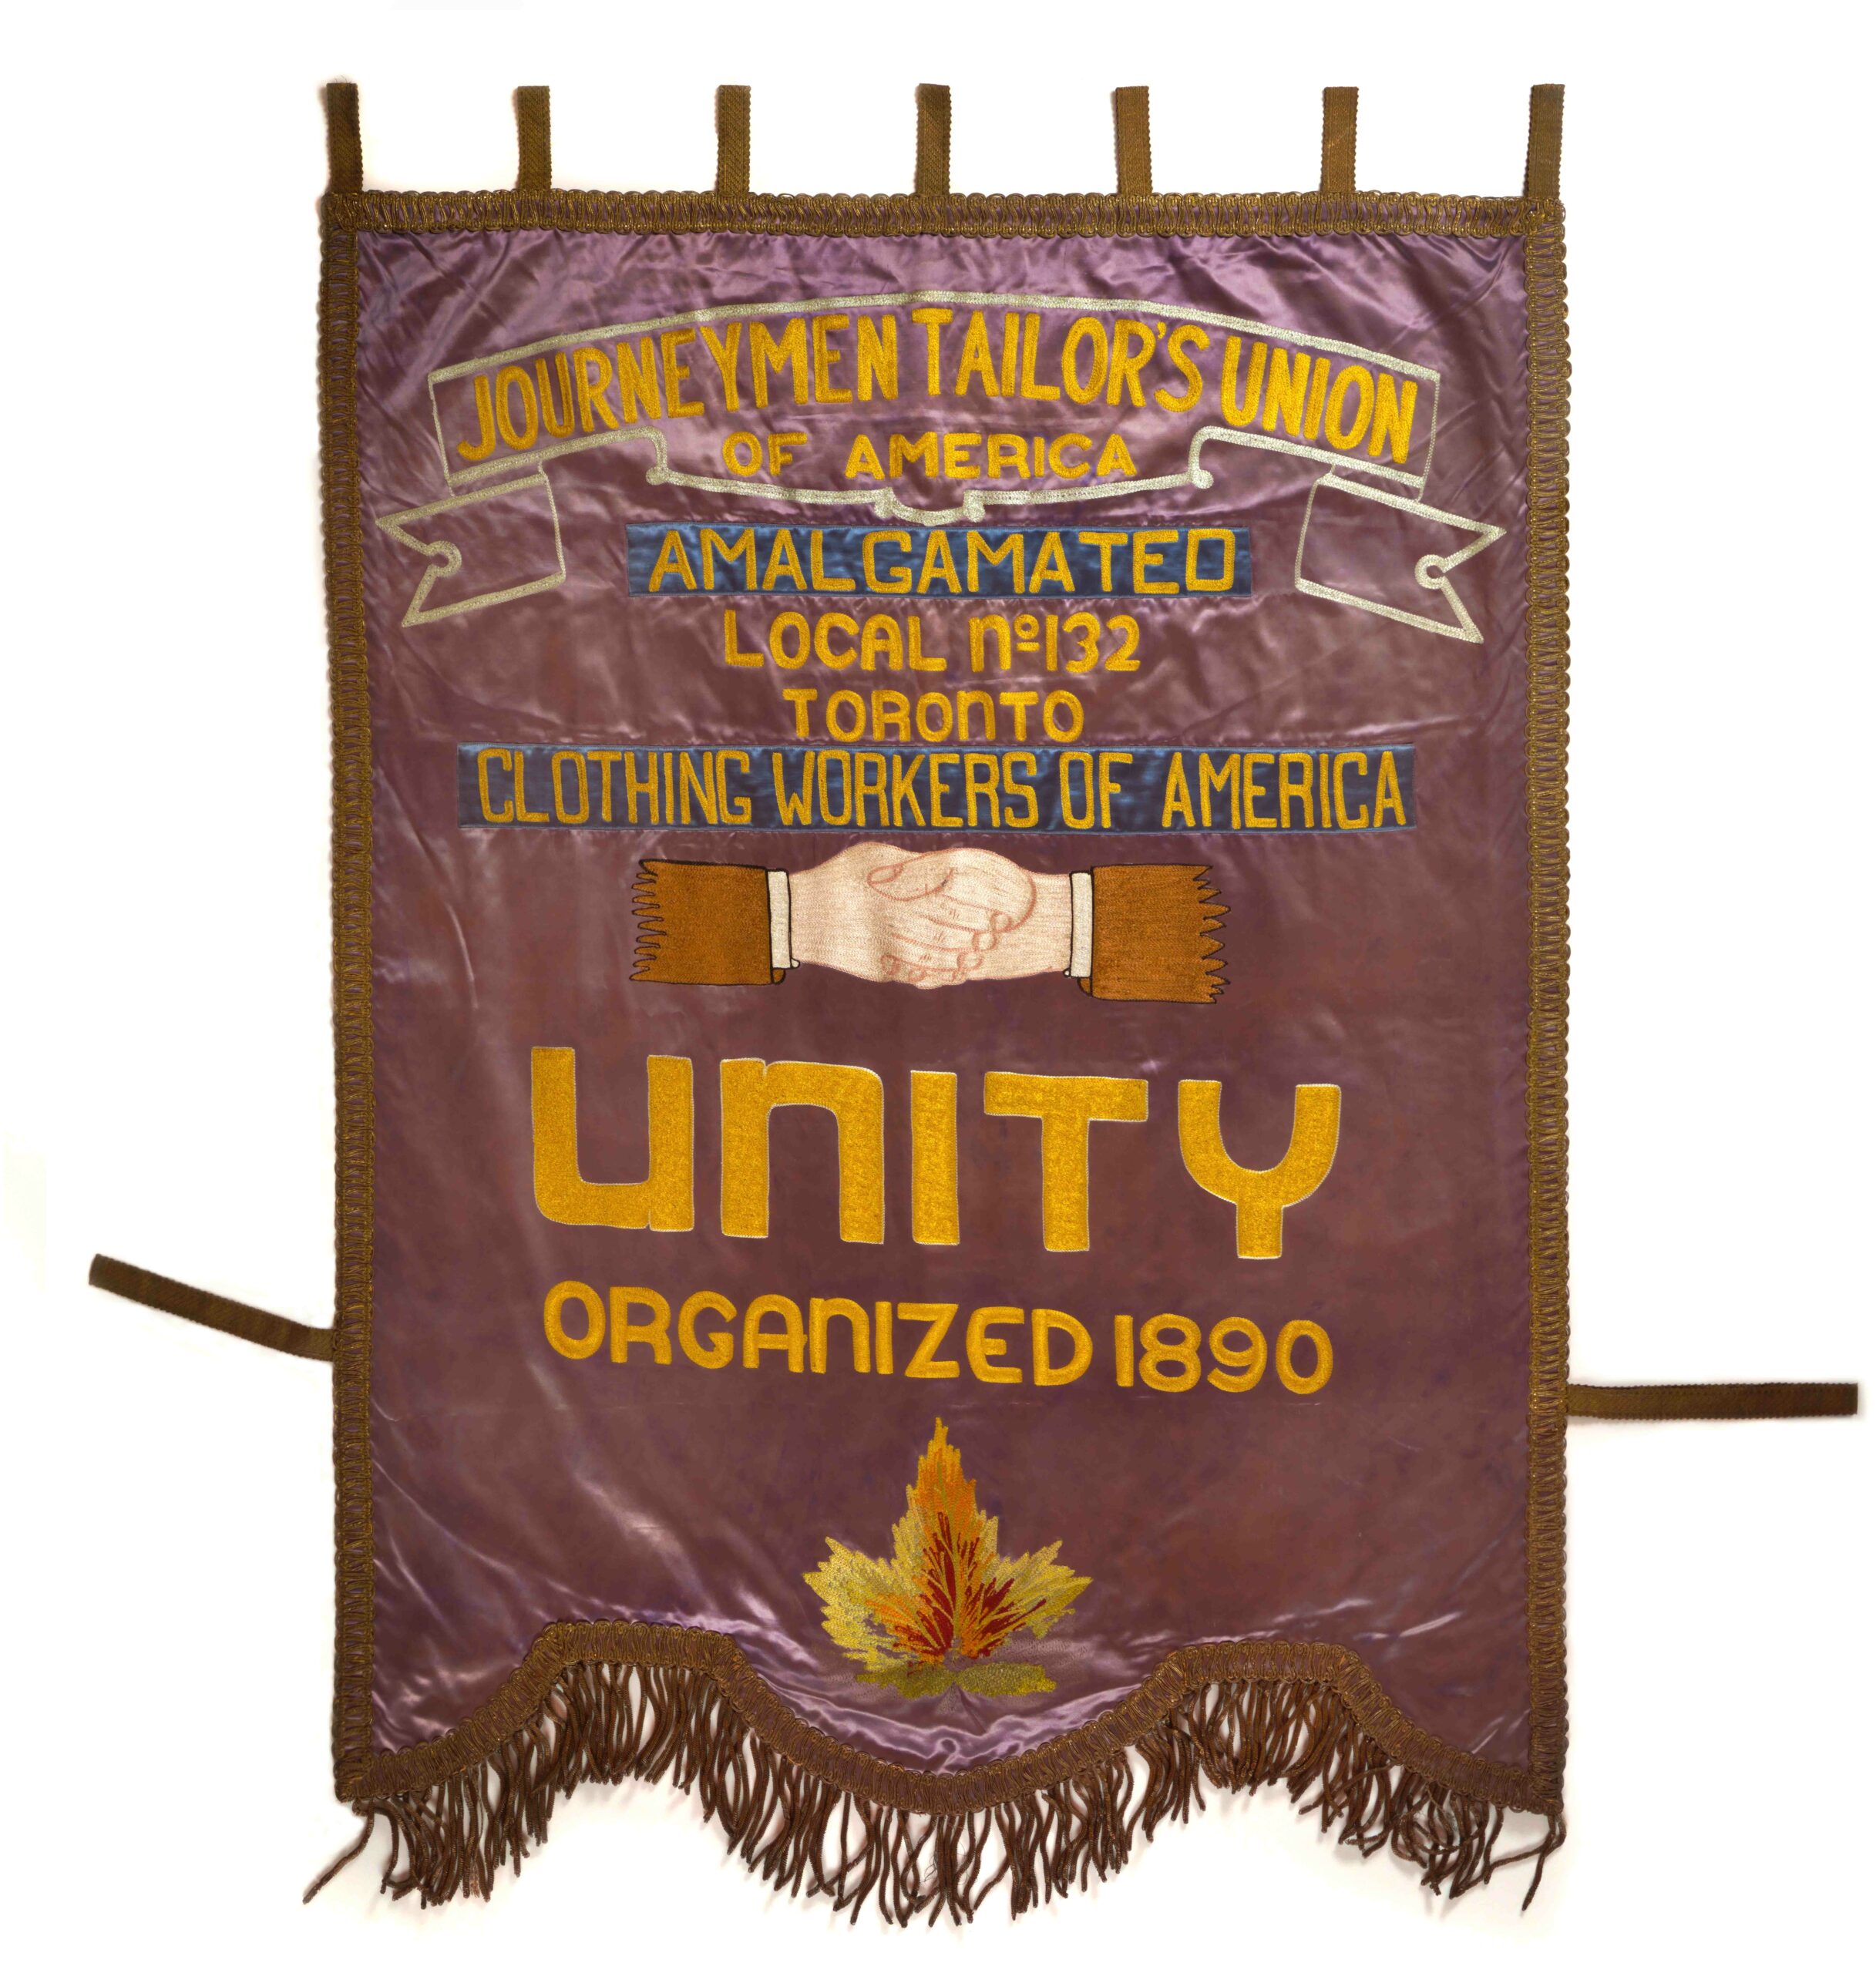 Banner, Journeymen Tailors Union of America, ACWA Local 132